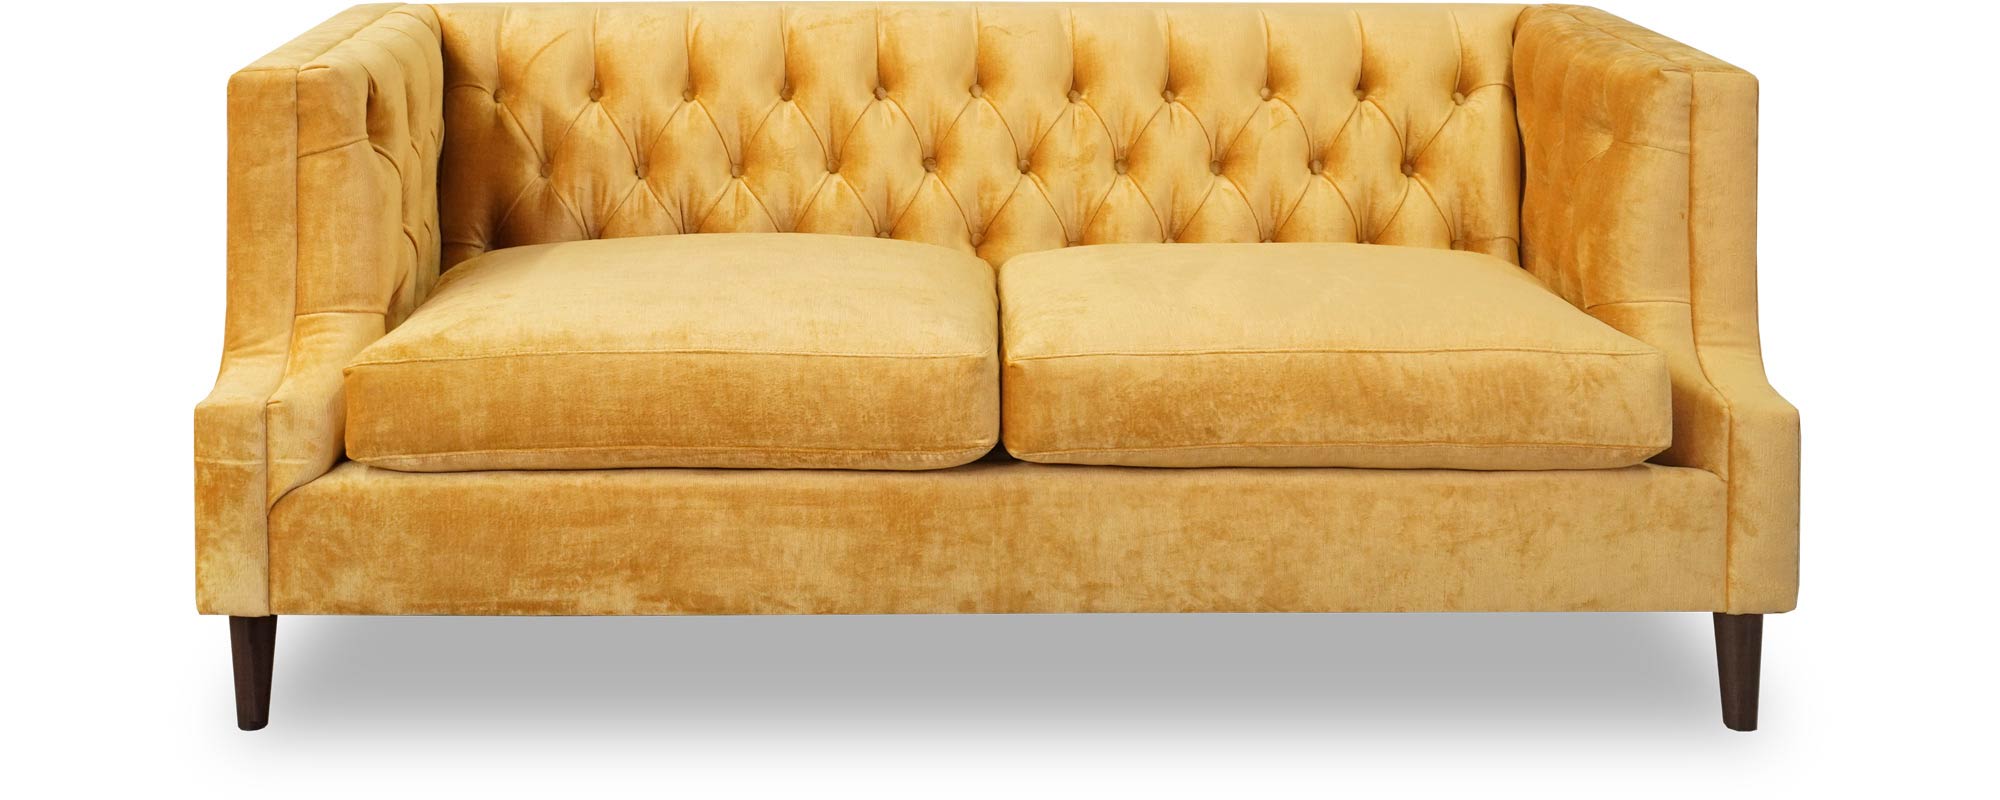 72 Capote sofa in Bruges Gold